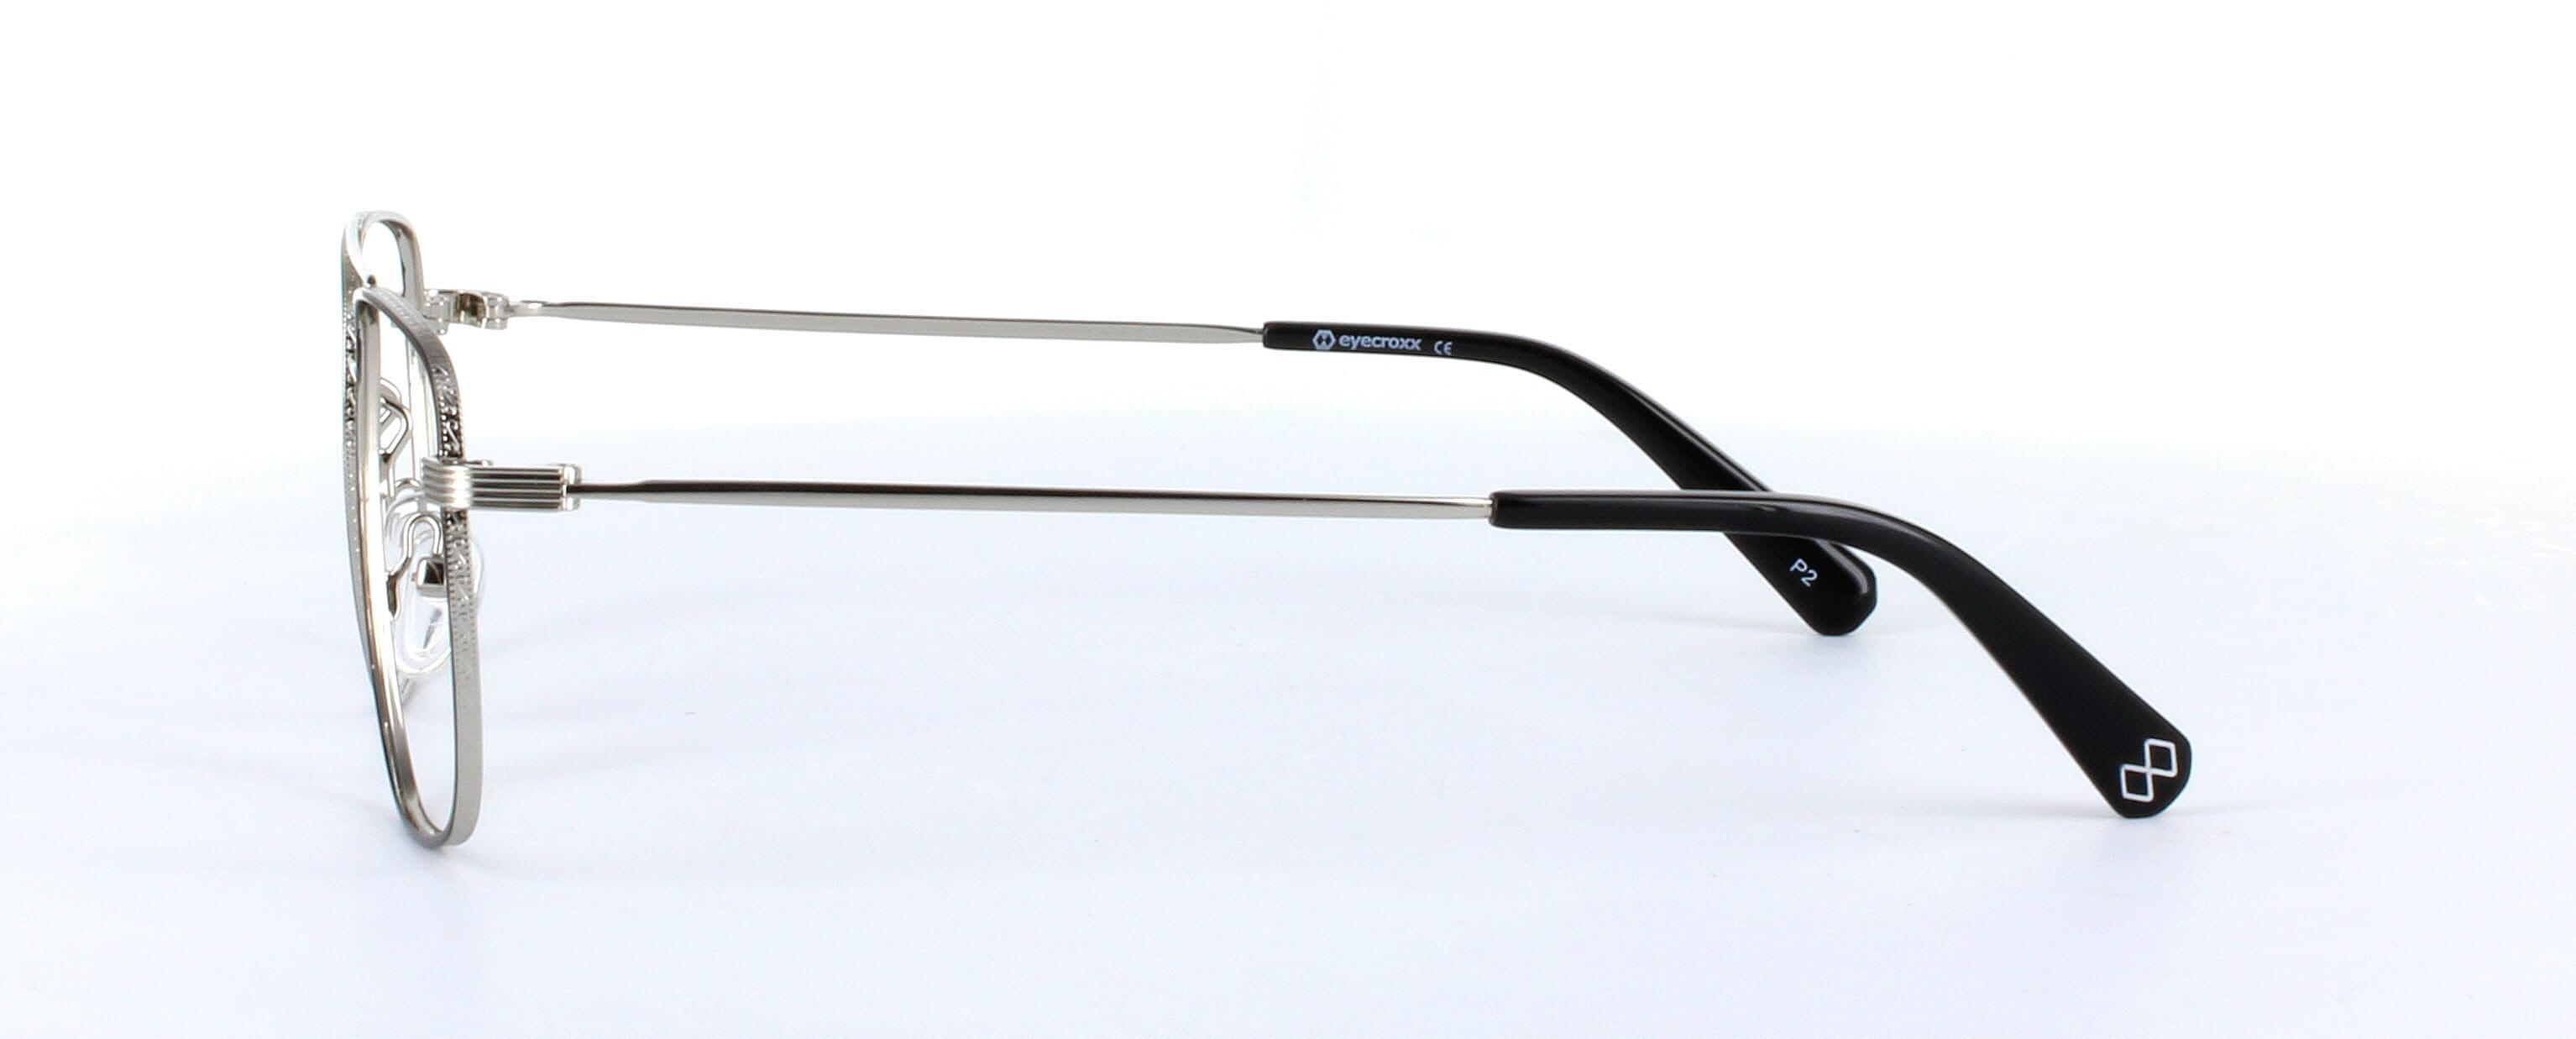 Eyecroxx 598-C3 Black and Silver Full Rim Aviator Metal Glasses - Image View 2